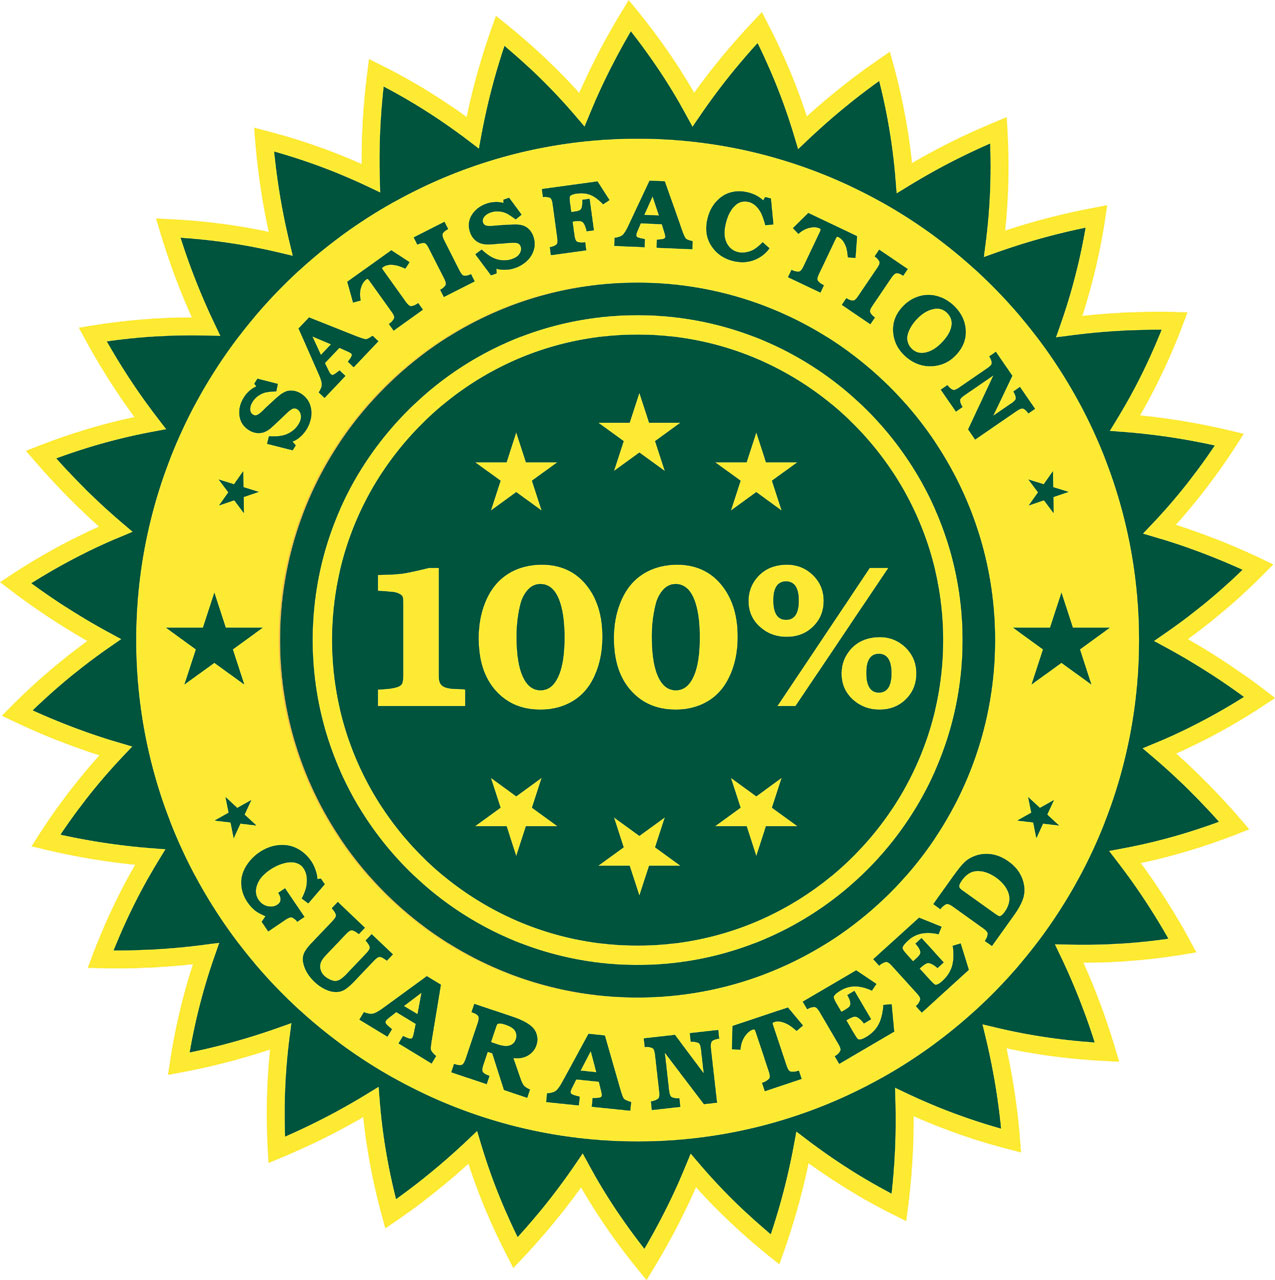 Satisfaction Guaranteed Sticker